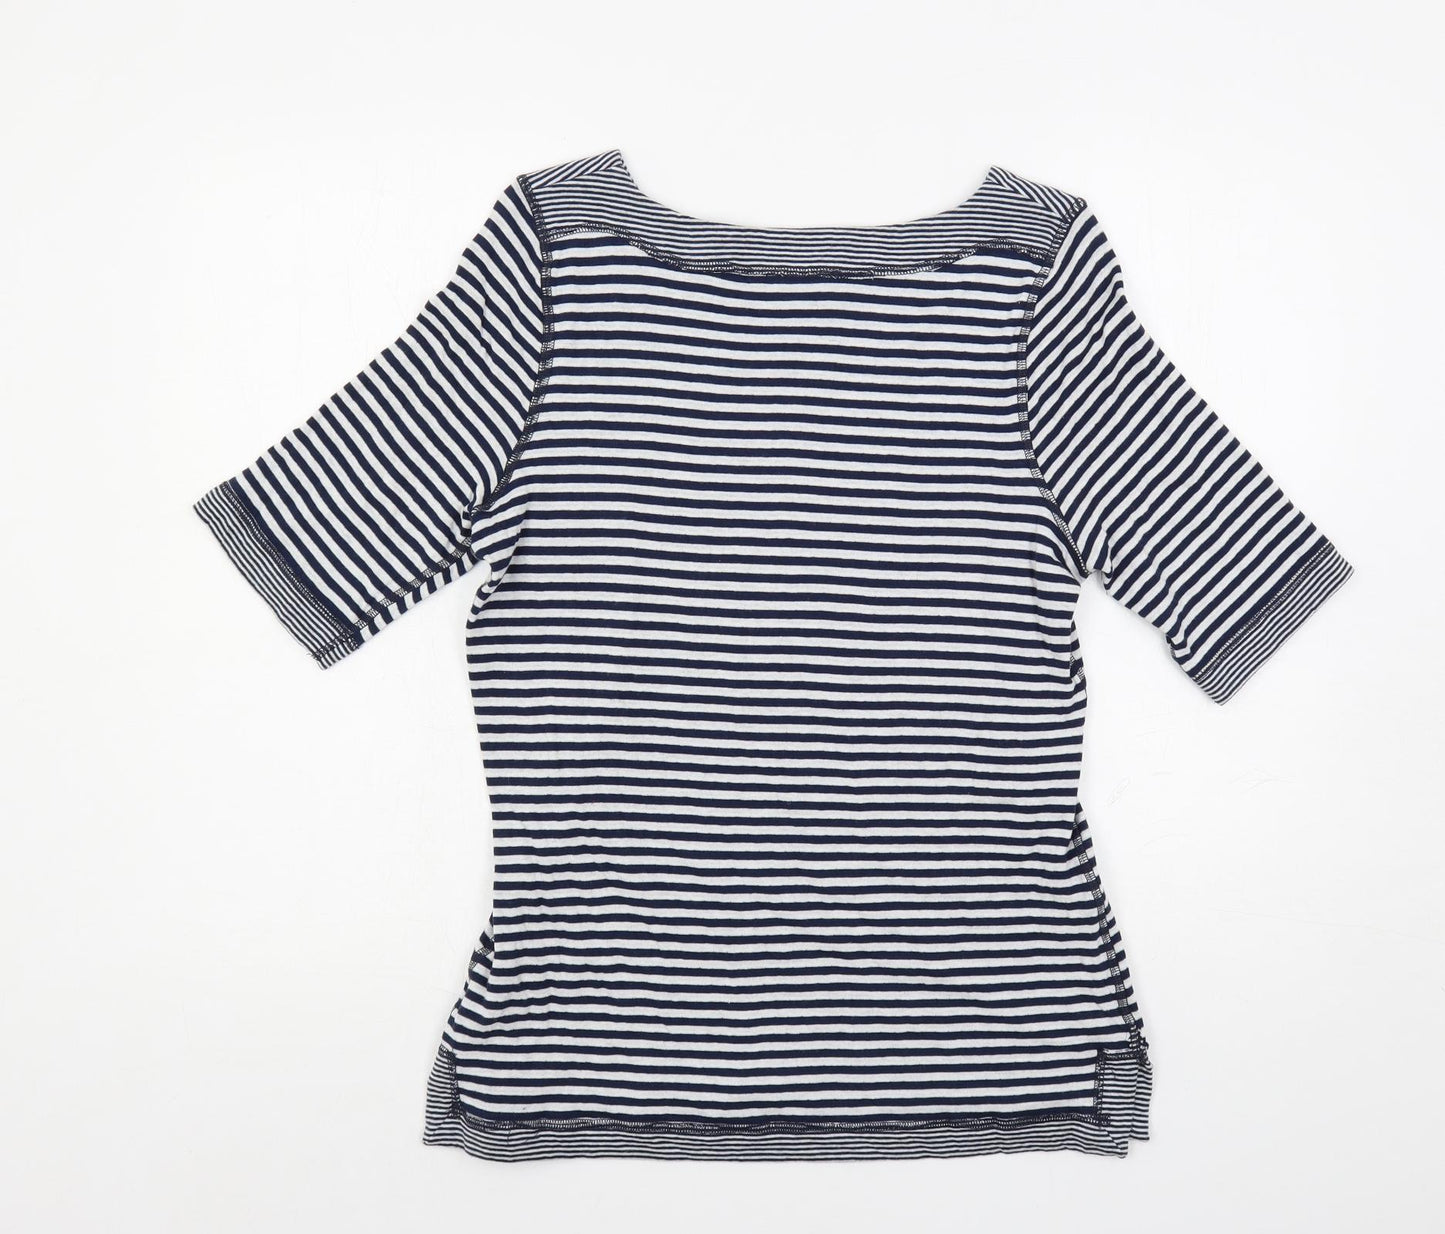 FDJ Womens Blue Striped Cotton Basic T-Shirt Size S Boat Neck